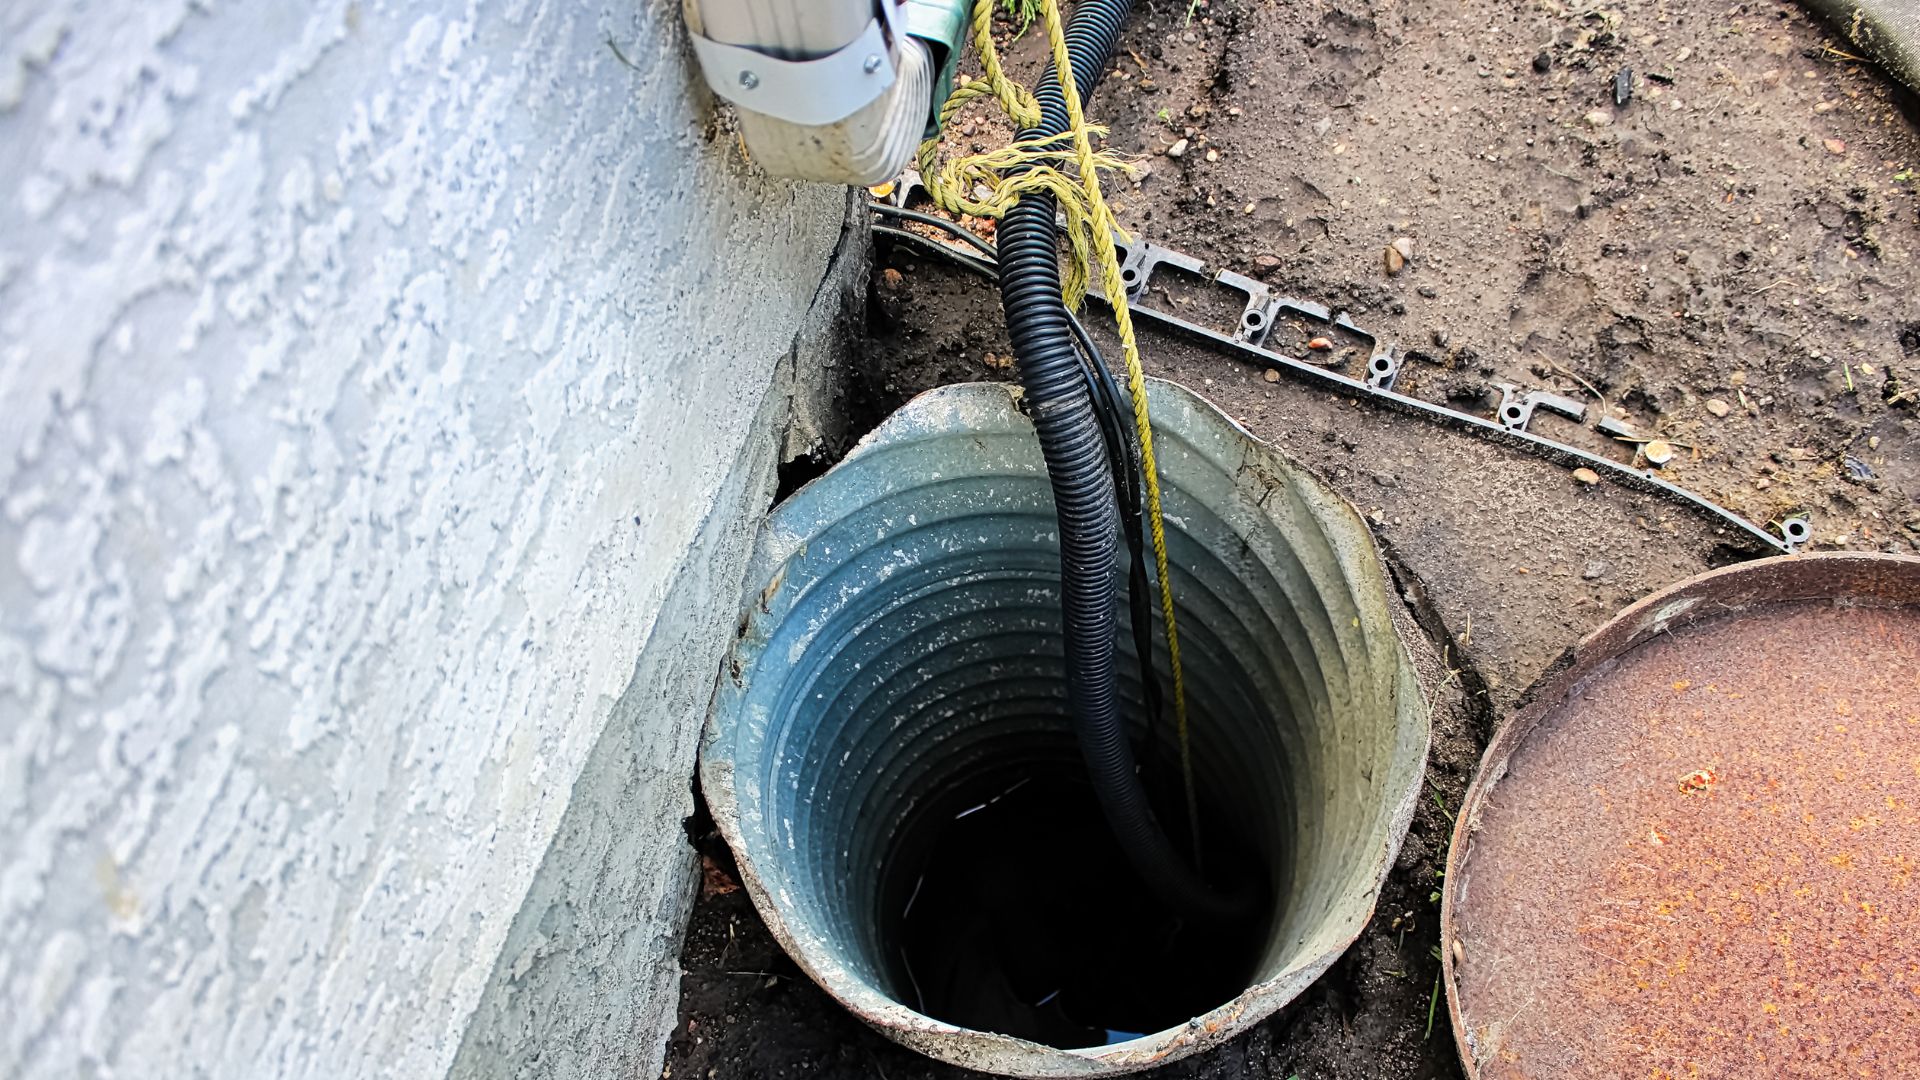 Sump Pump Repair & Replacement in North Port, Florida with Major League Plumbing